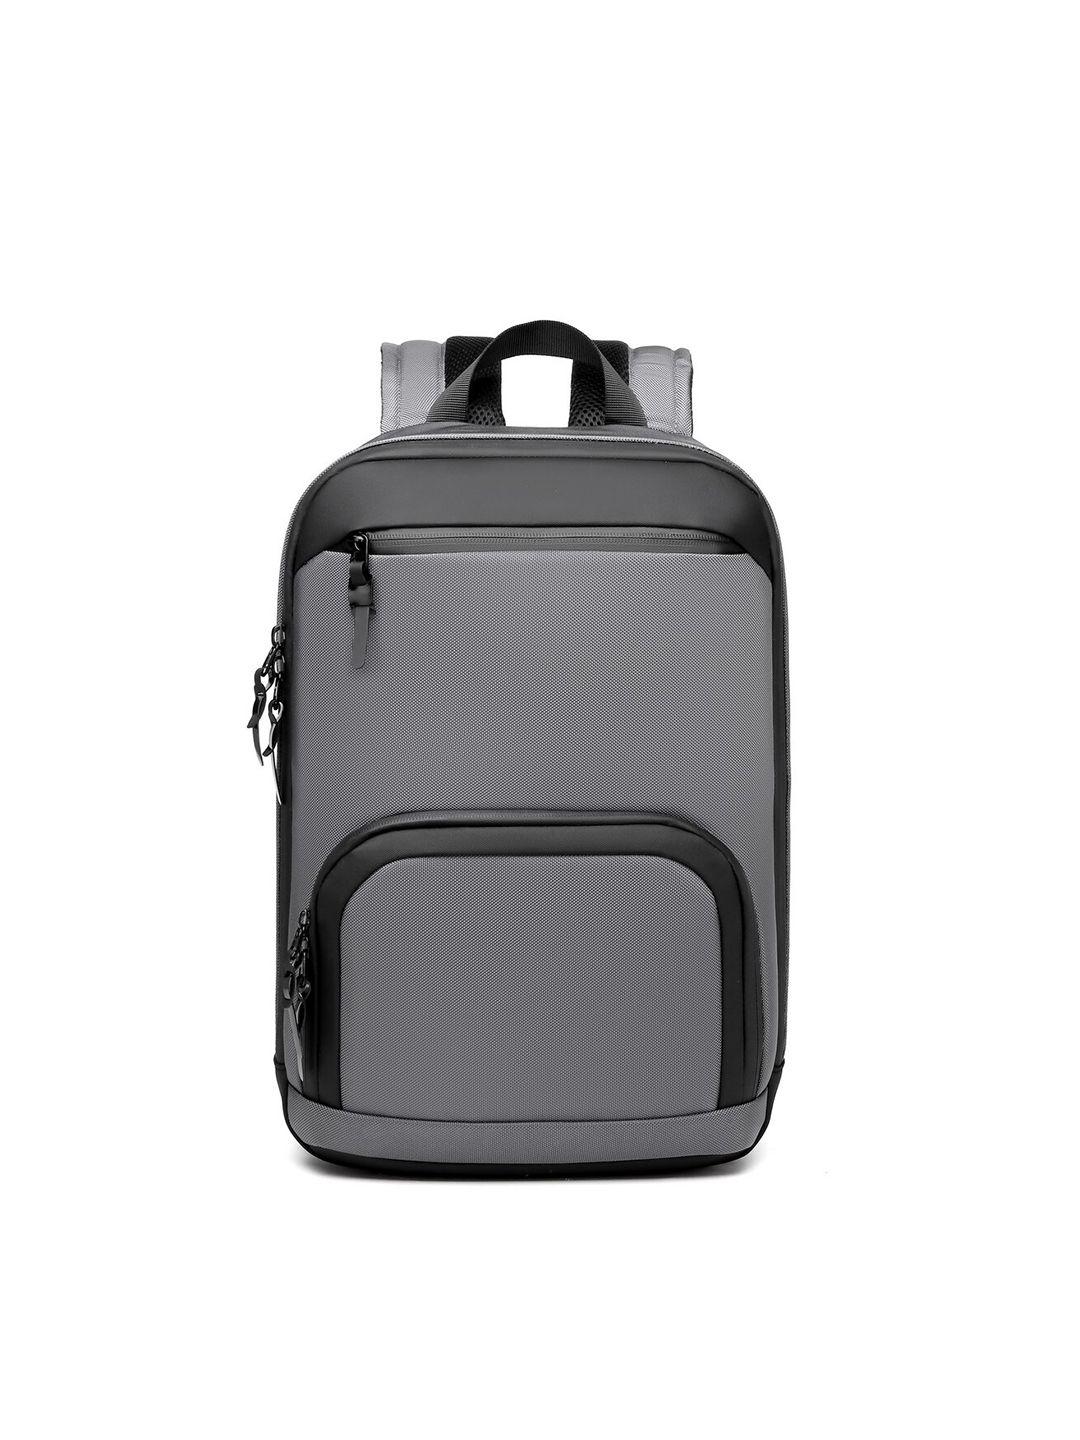 ozuko-9474-range-textured-soft-one-size-core-backpack